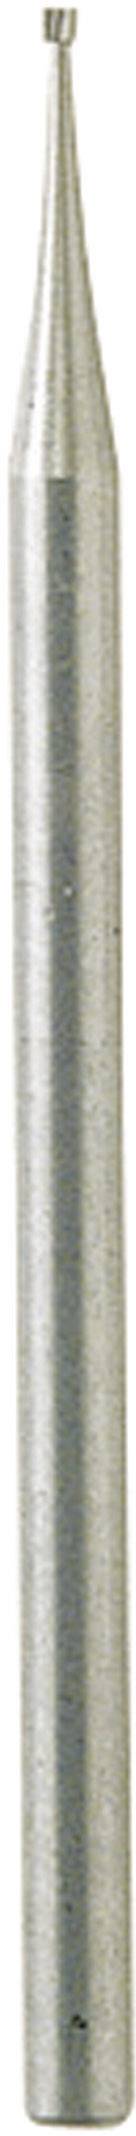 DREMEL Graviermesser 0,8 mm Dremel 108 Dremel 26150108JA Schaft-Ø 3.2 mm 3 St.